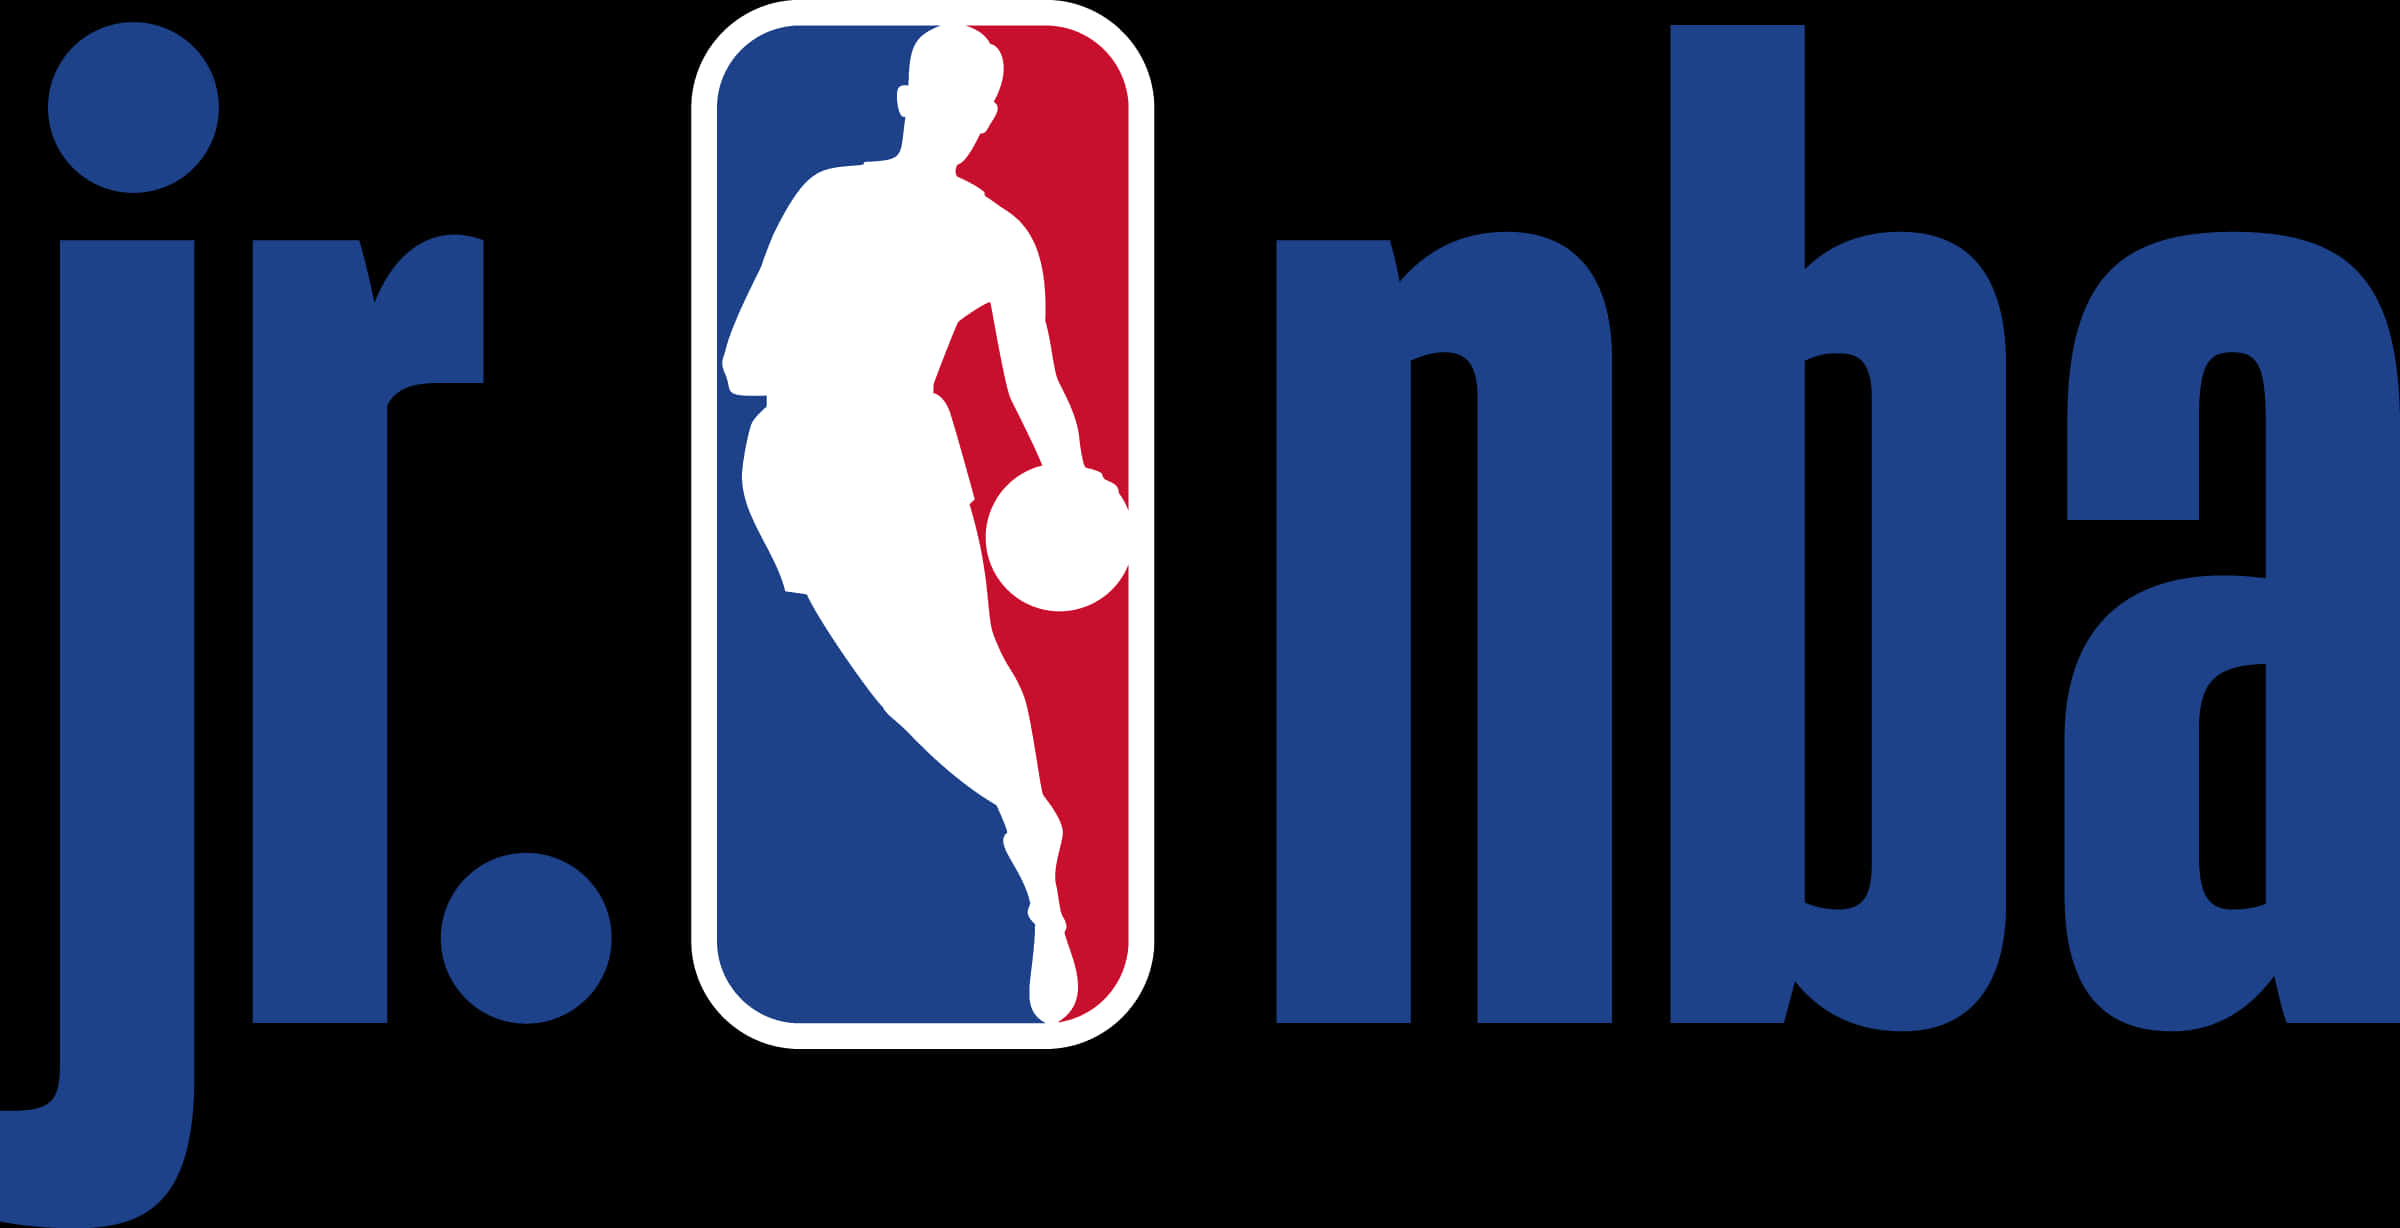 A Logo Of A Basketball Player